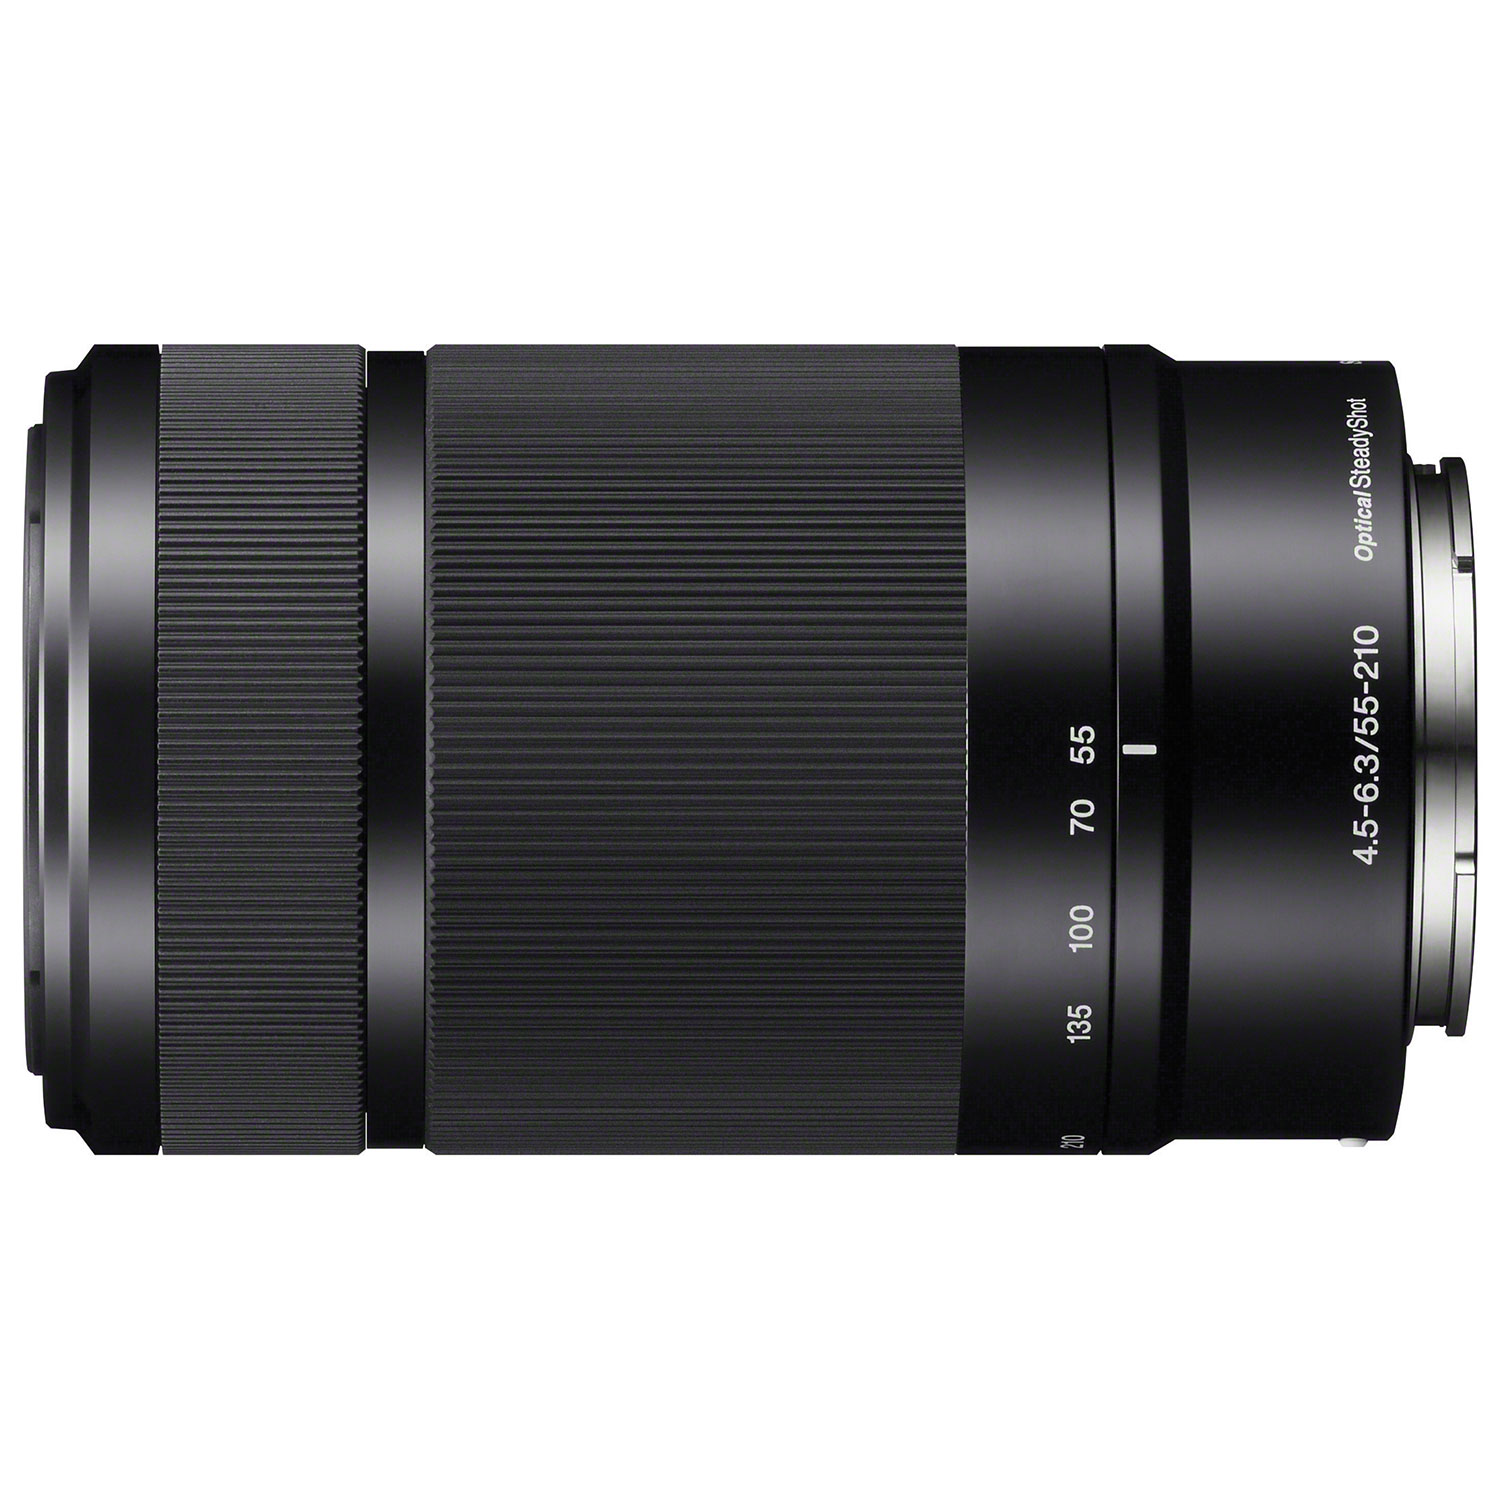 Sony E-Mount APS-C 55–210mm f/4.5-6.3 OSS 3.8x Telephoto Zoom Lens - Black